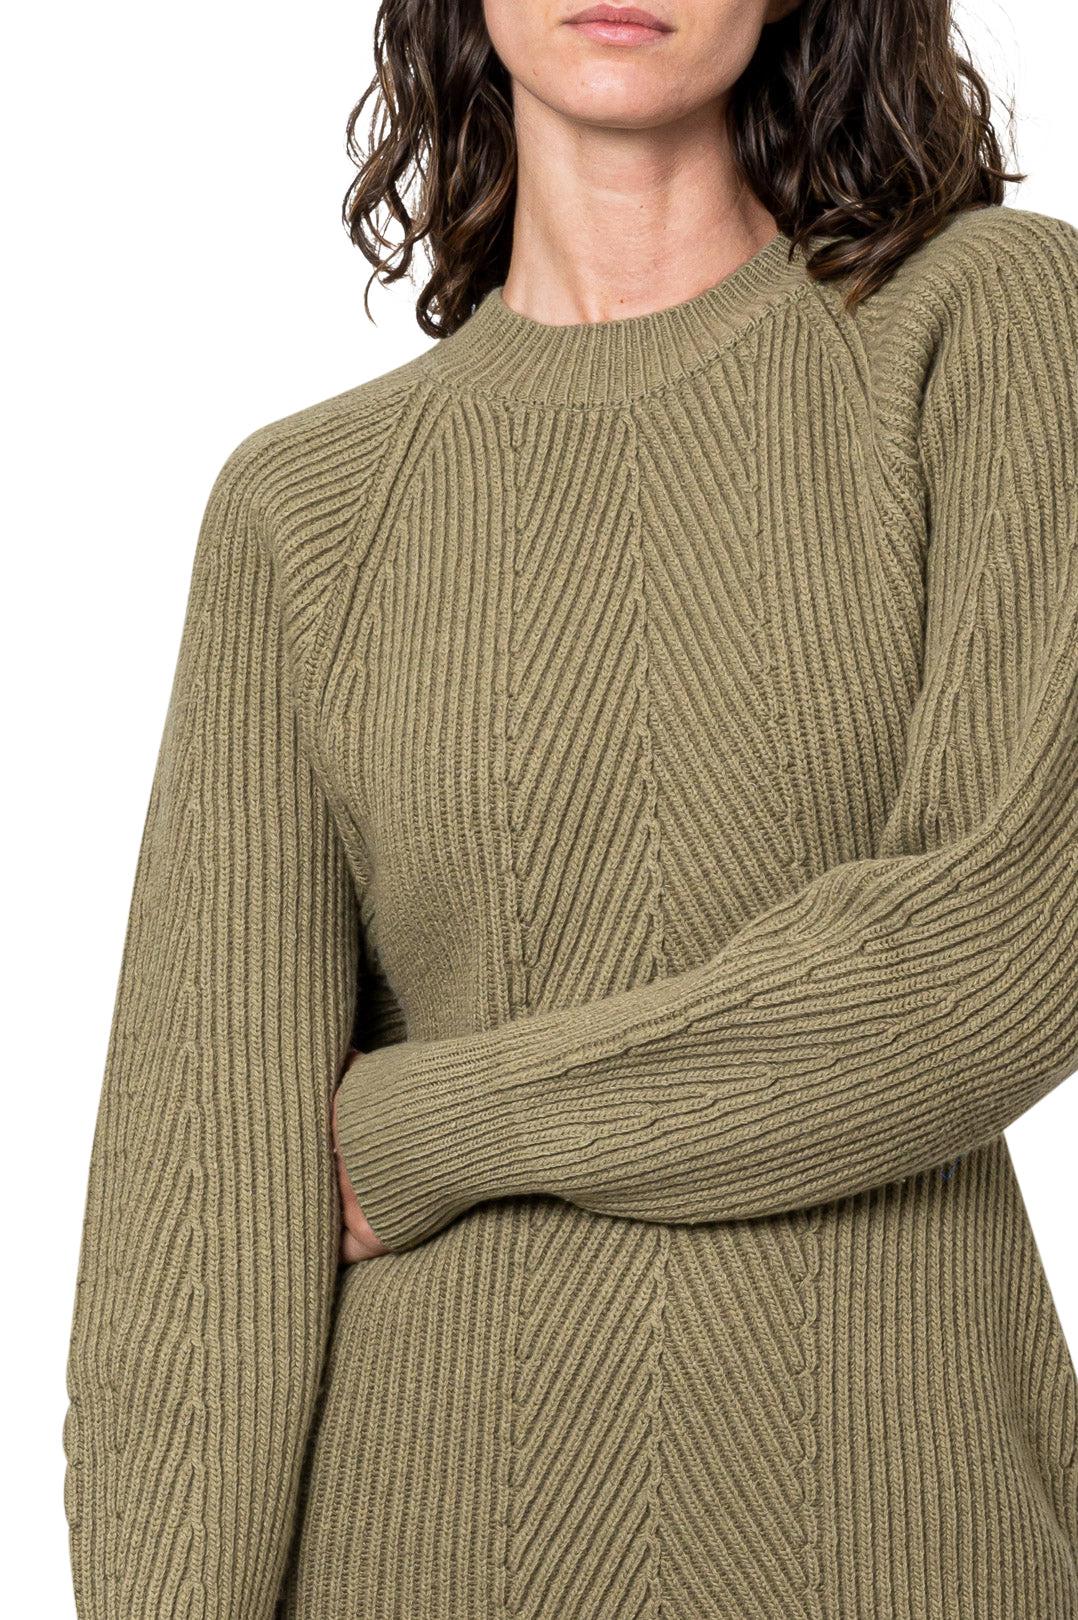 Lvir-Ribbed wool mini-dress-LV21-KN03-dgallerystore